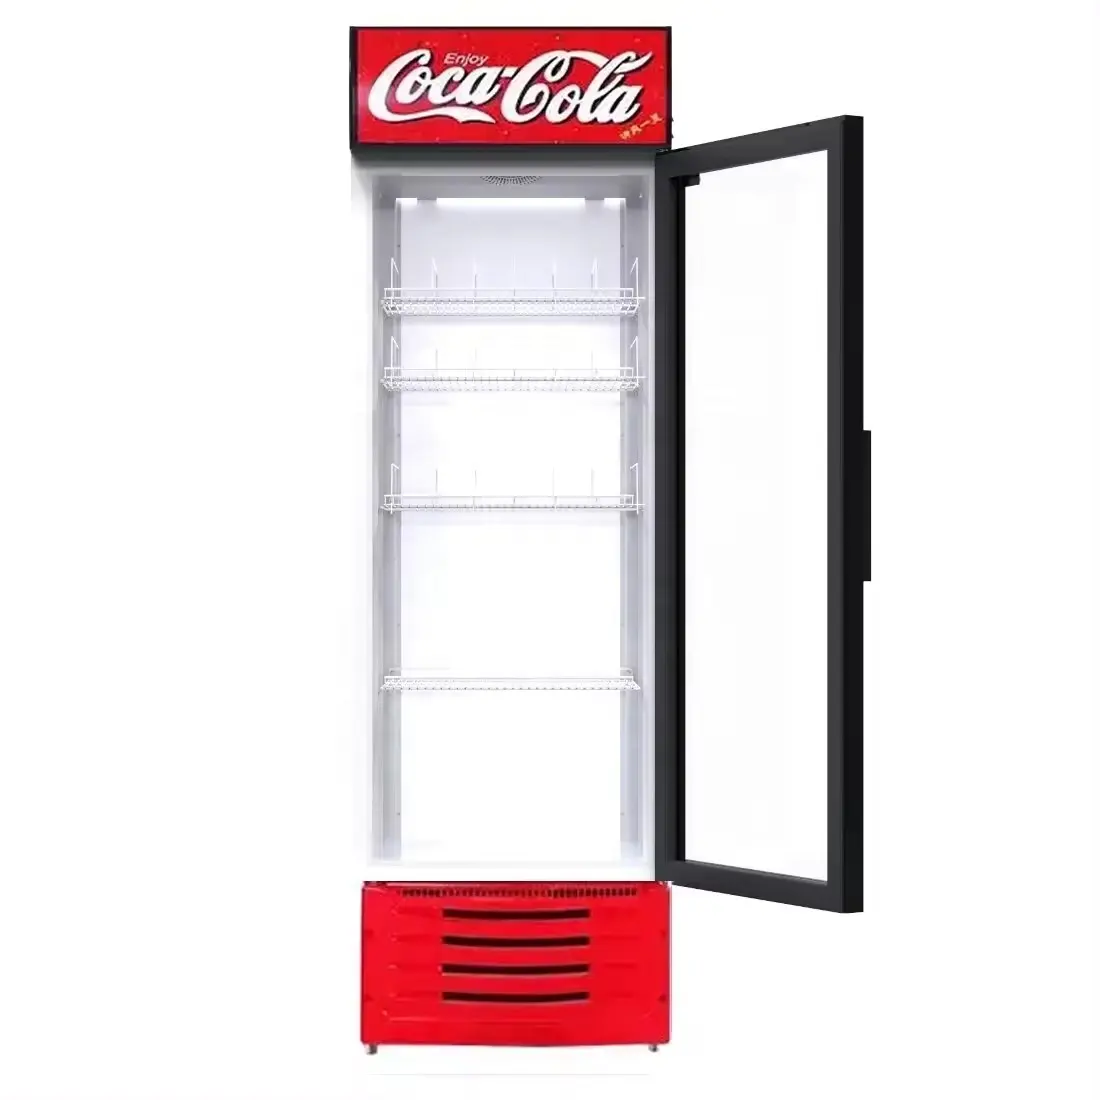 Glass Door Pepsi Beverage Cooler Commercial Display Freezer Refrigeration Large sticker